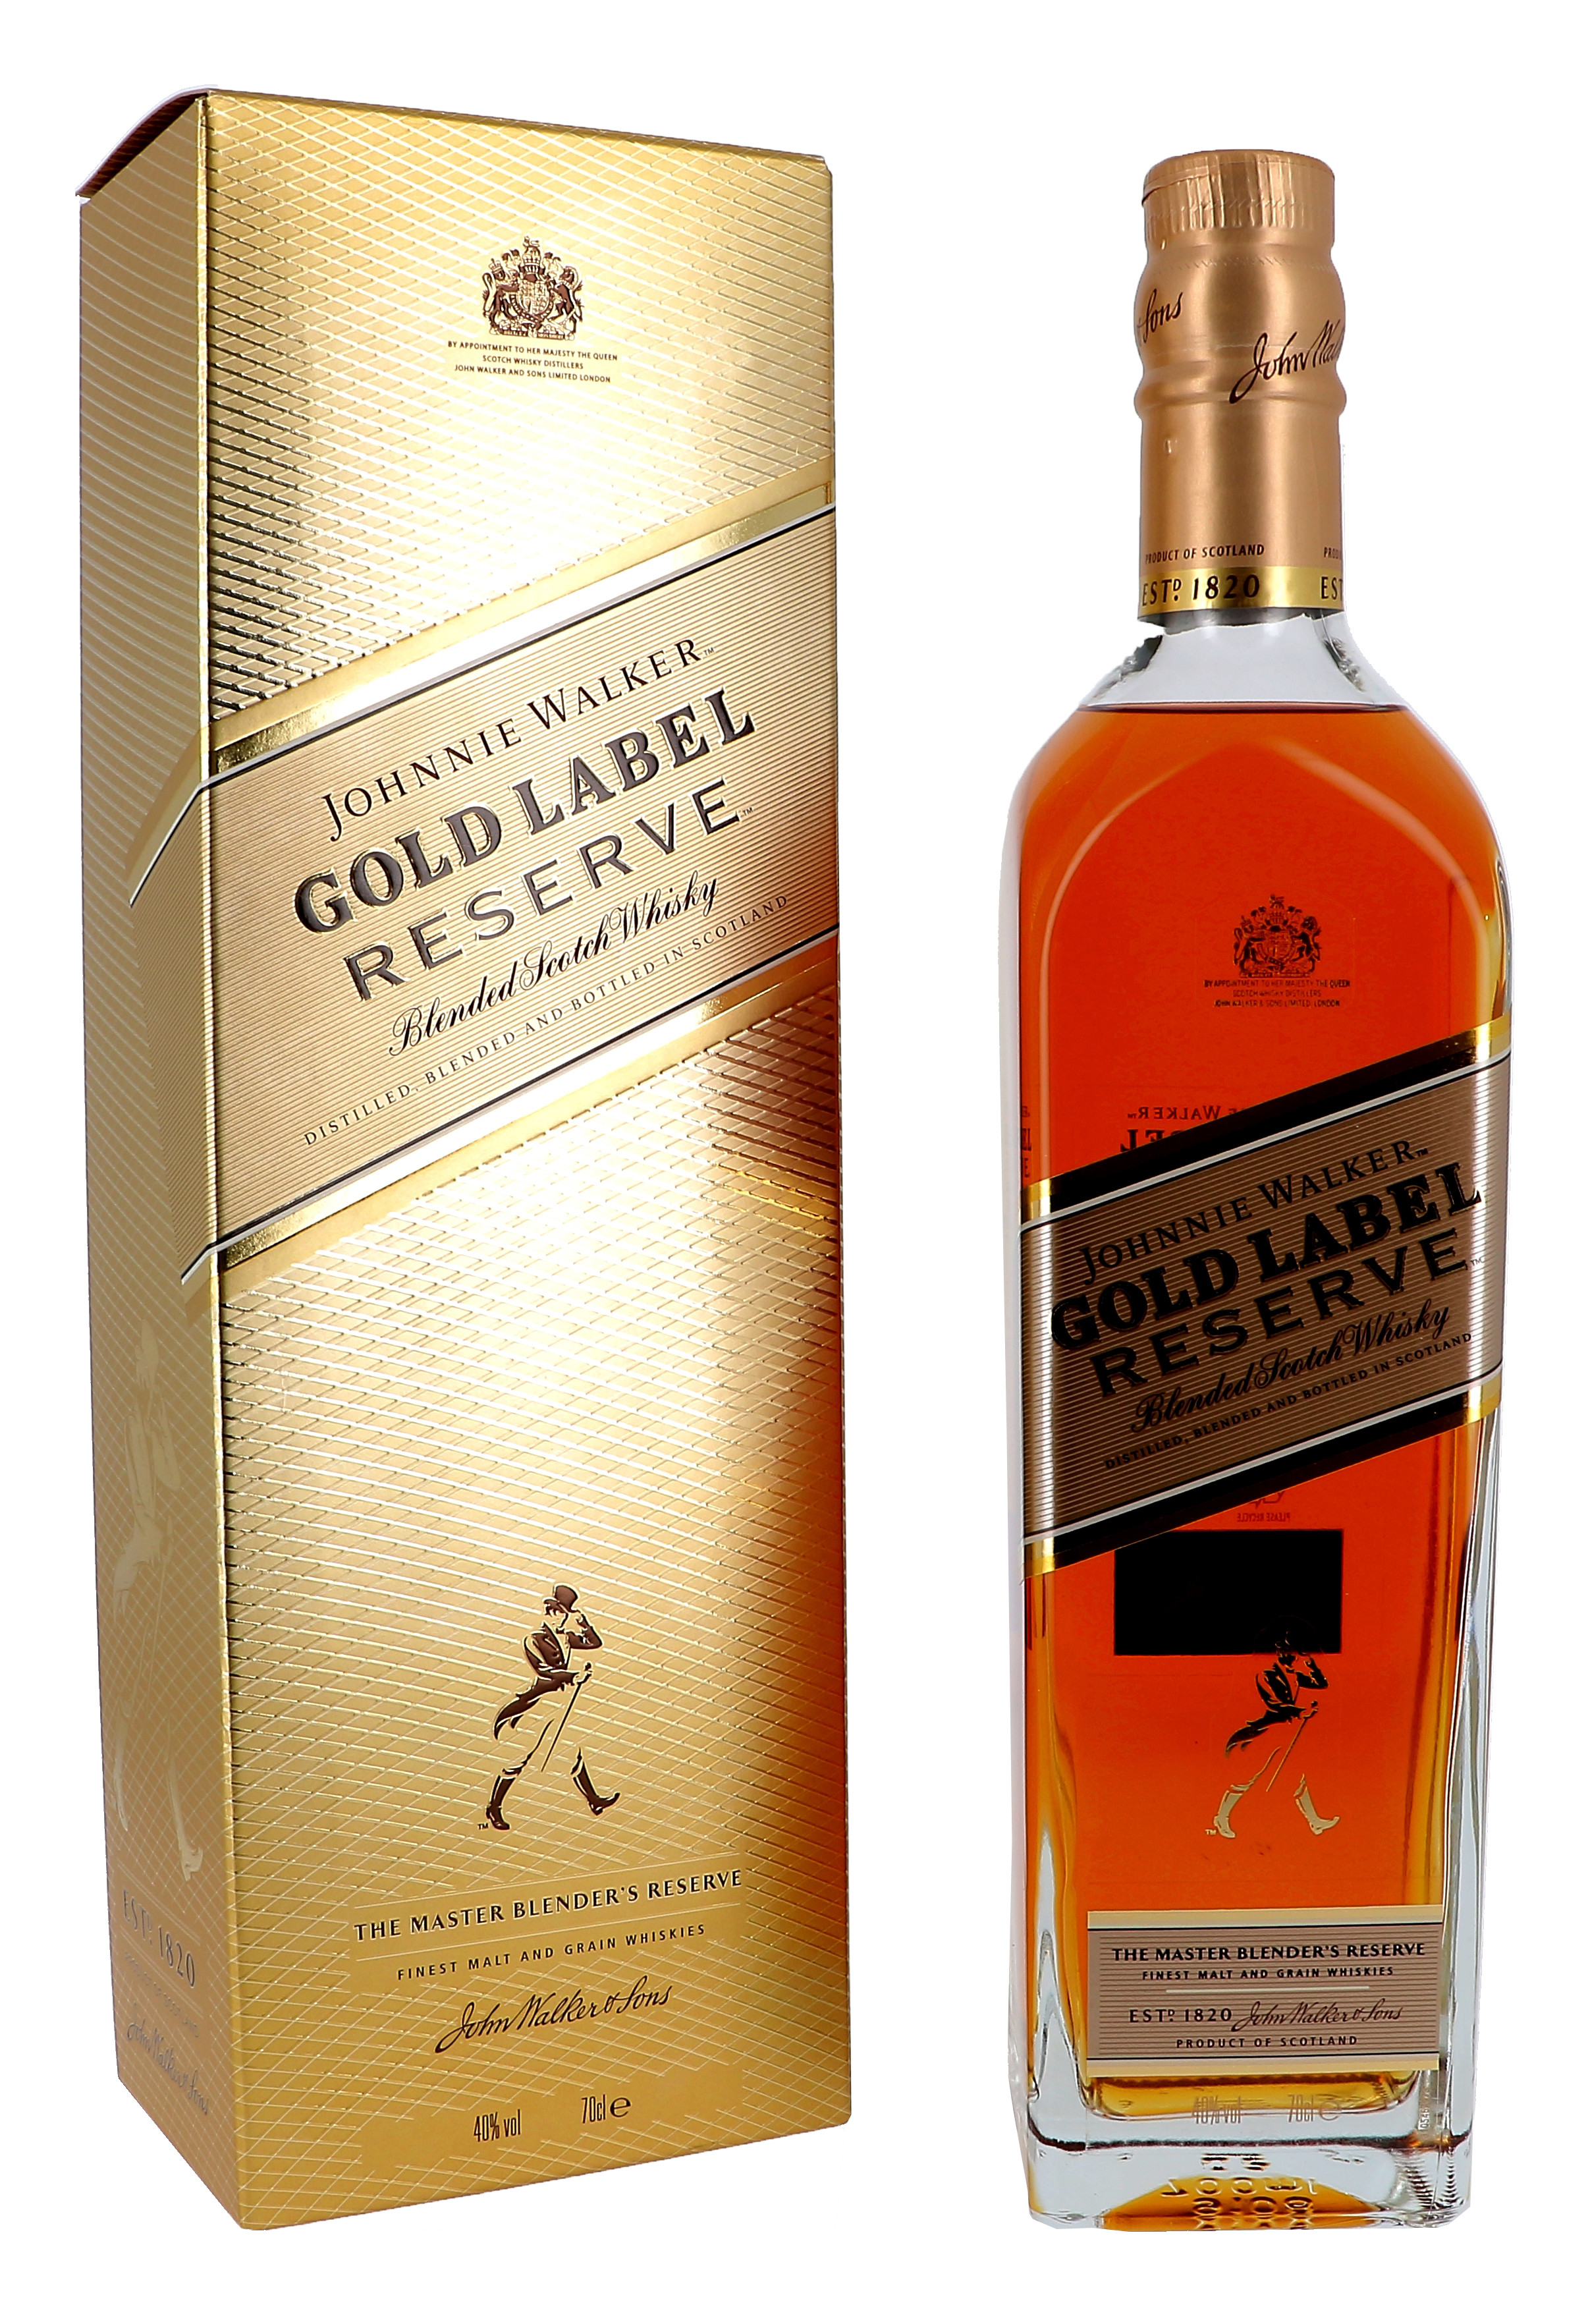 Johnnie walker gold label 70cl 43% scotch whisky